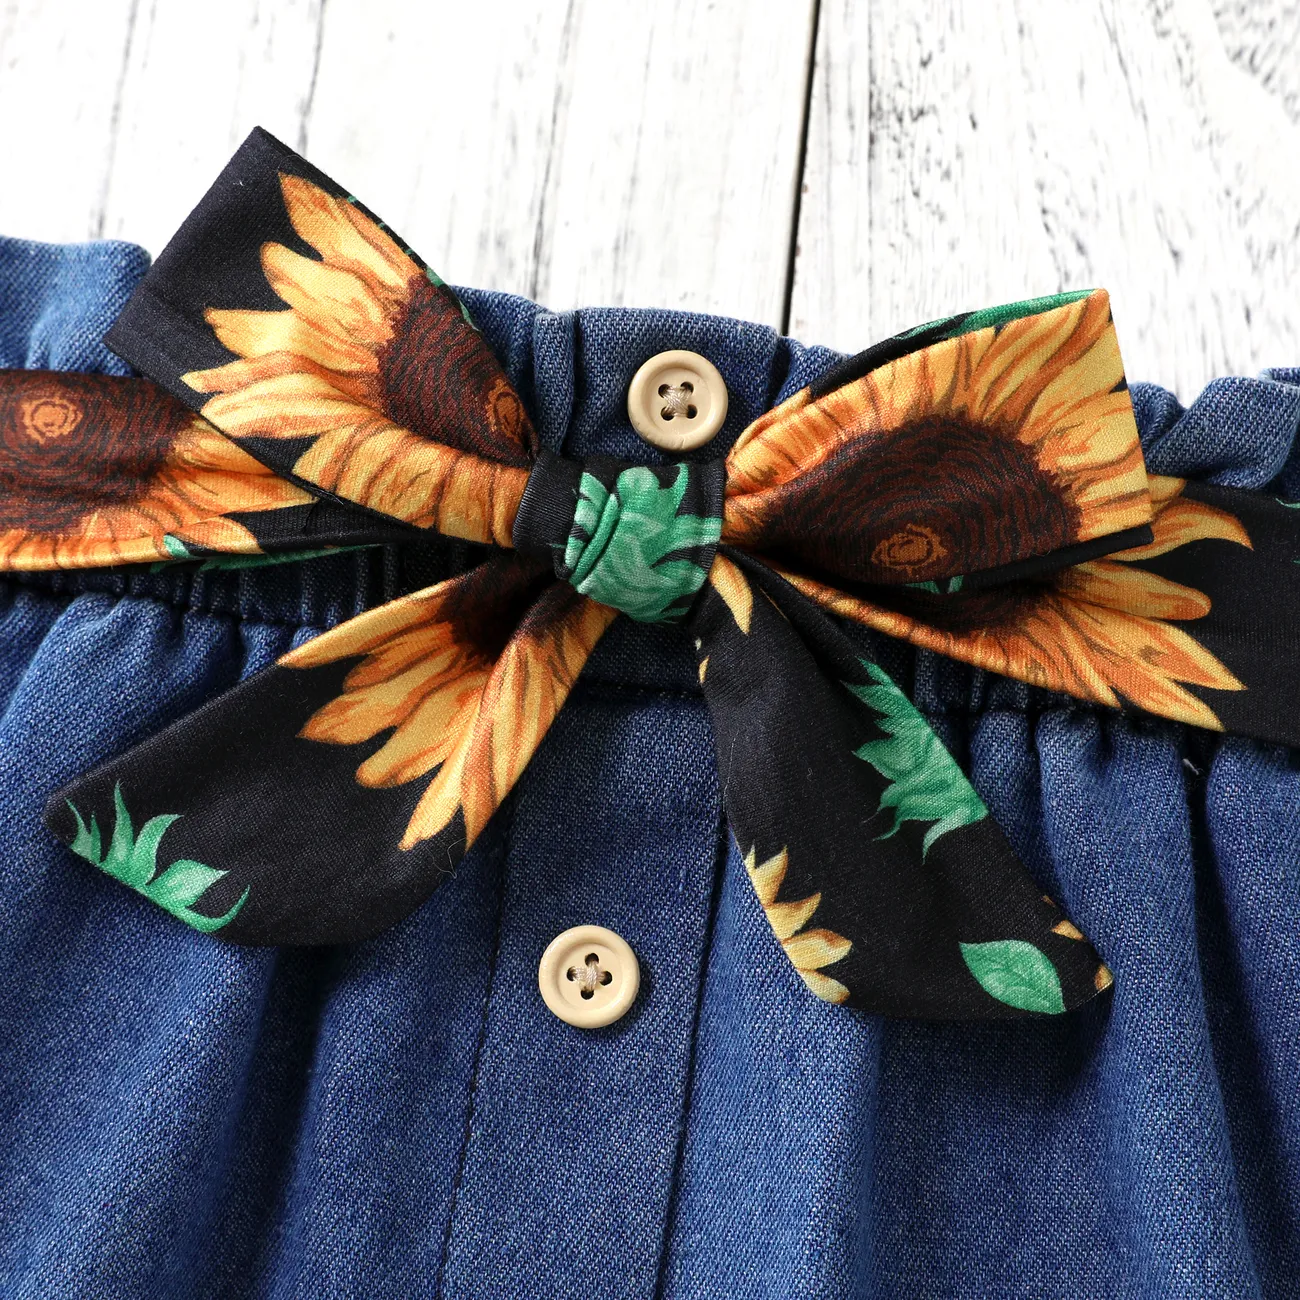 2pcsToddler Girl  Sweet Sunflower Dress Set with Ruffle Edge  Black big image 1